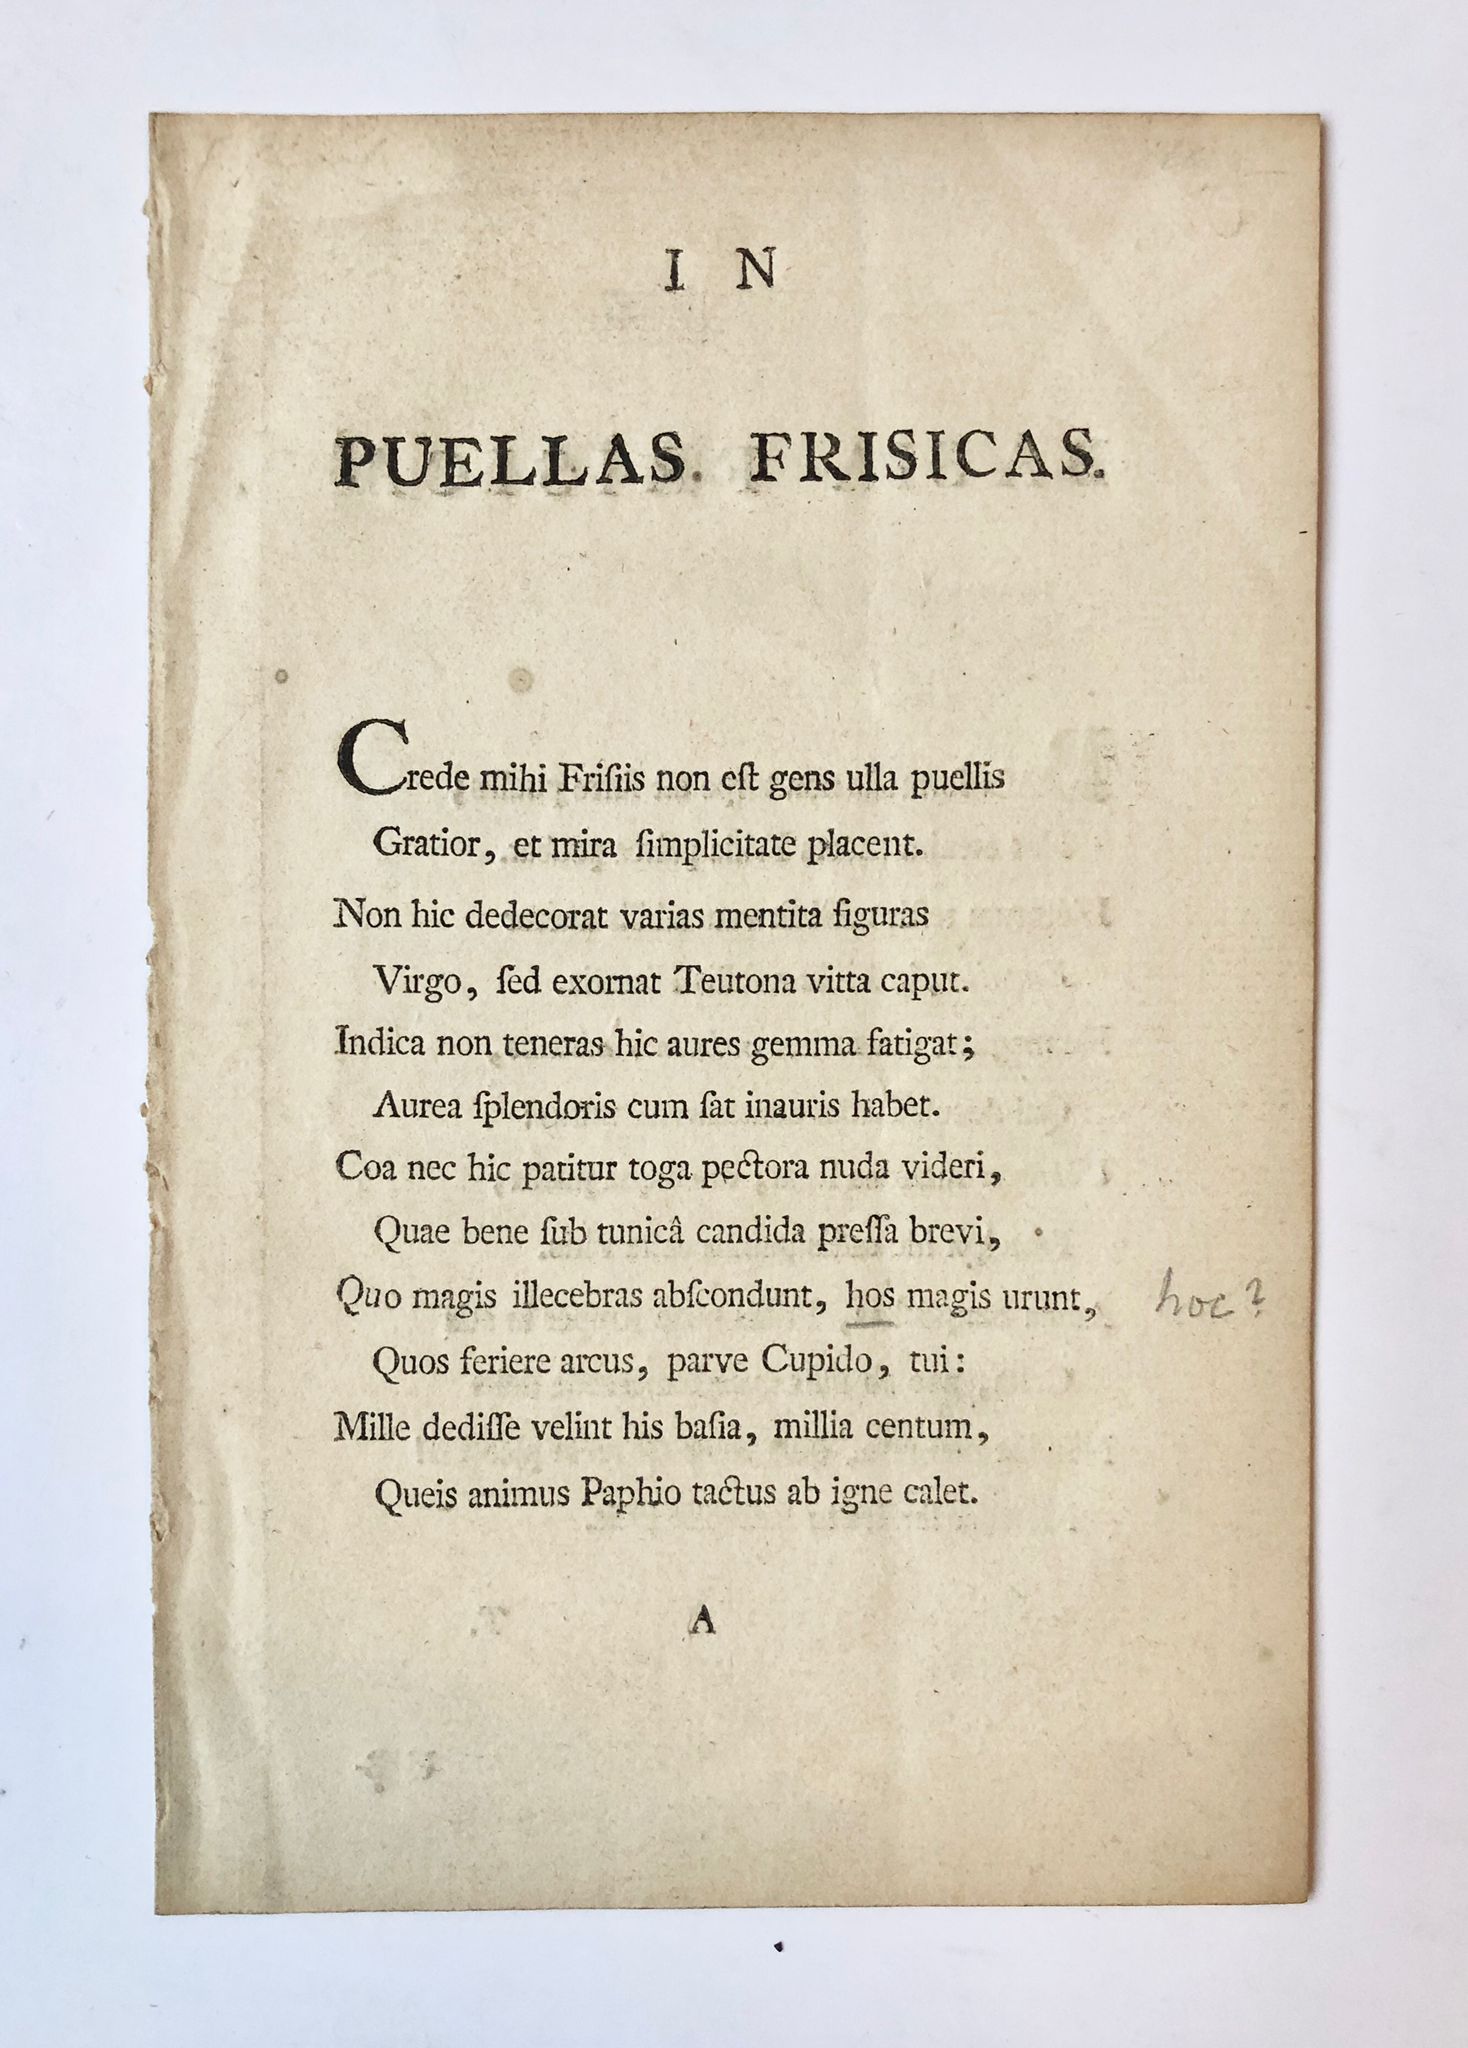 [Friesland, 18th century, Latin literature] In Puellas Frisicas, Friesland [s.l., s.n.] [18th century], 3 pp.